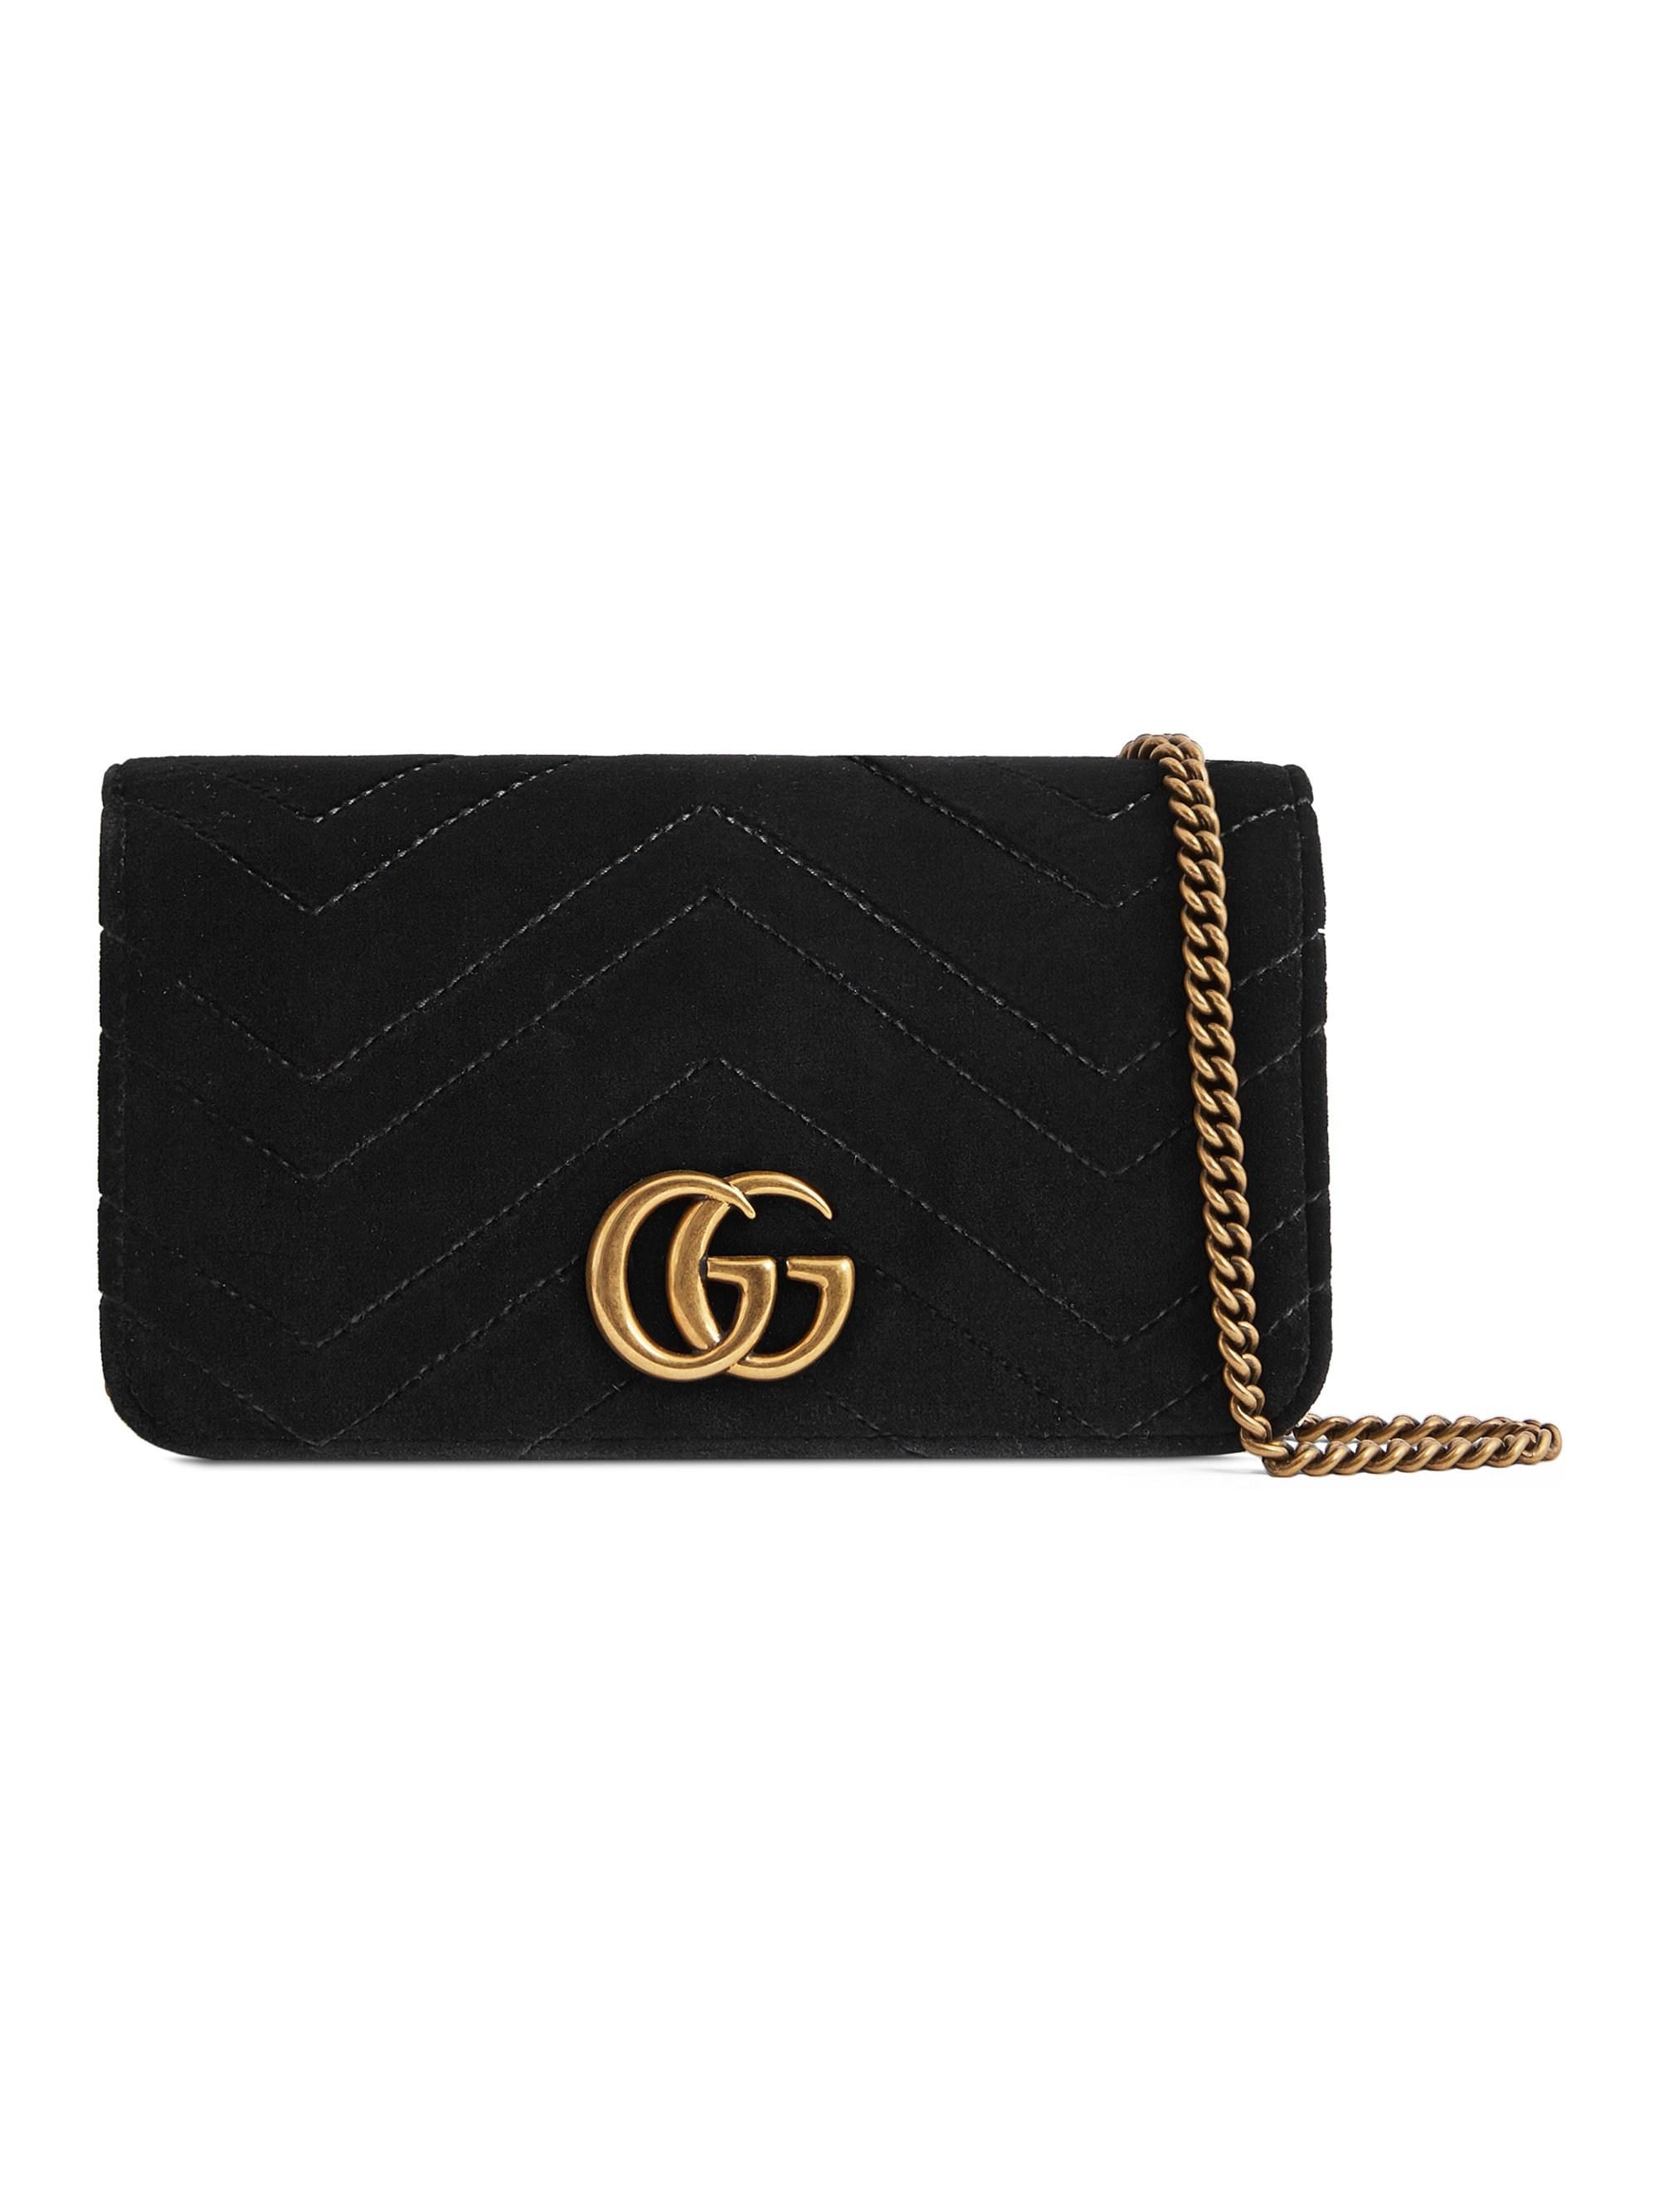 Gucci GG Marmont Velvet Wallet Chain in Black |